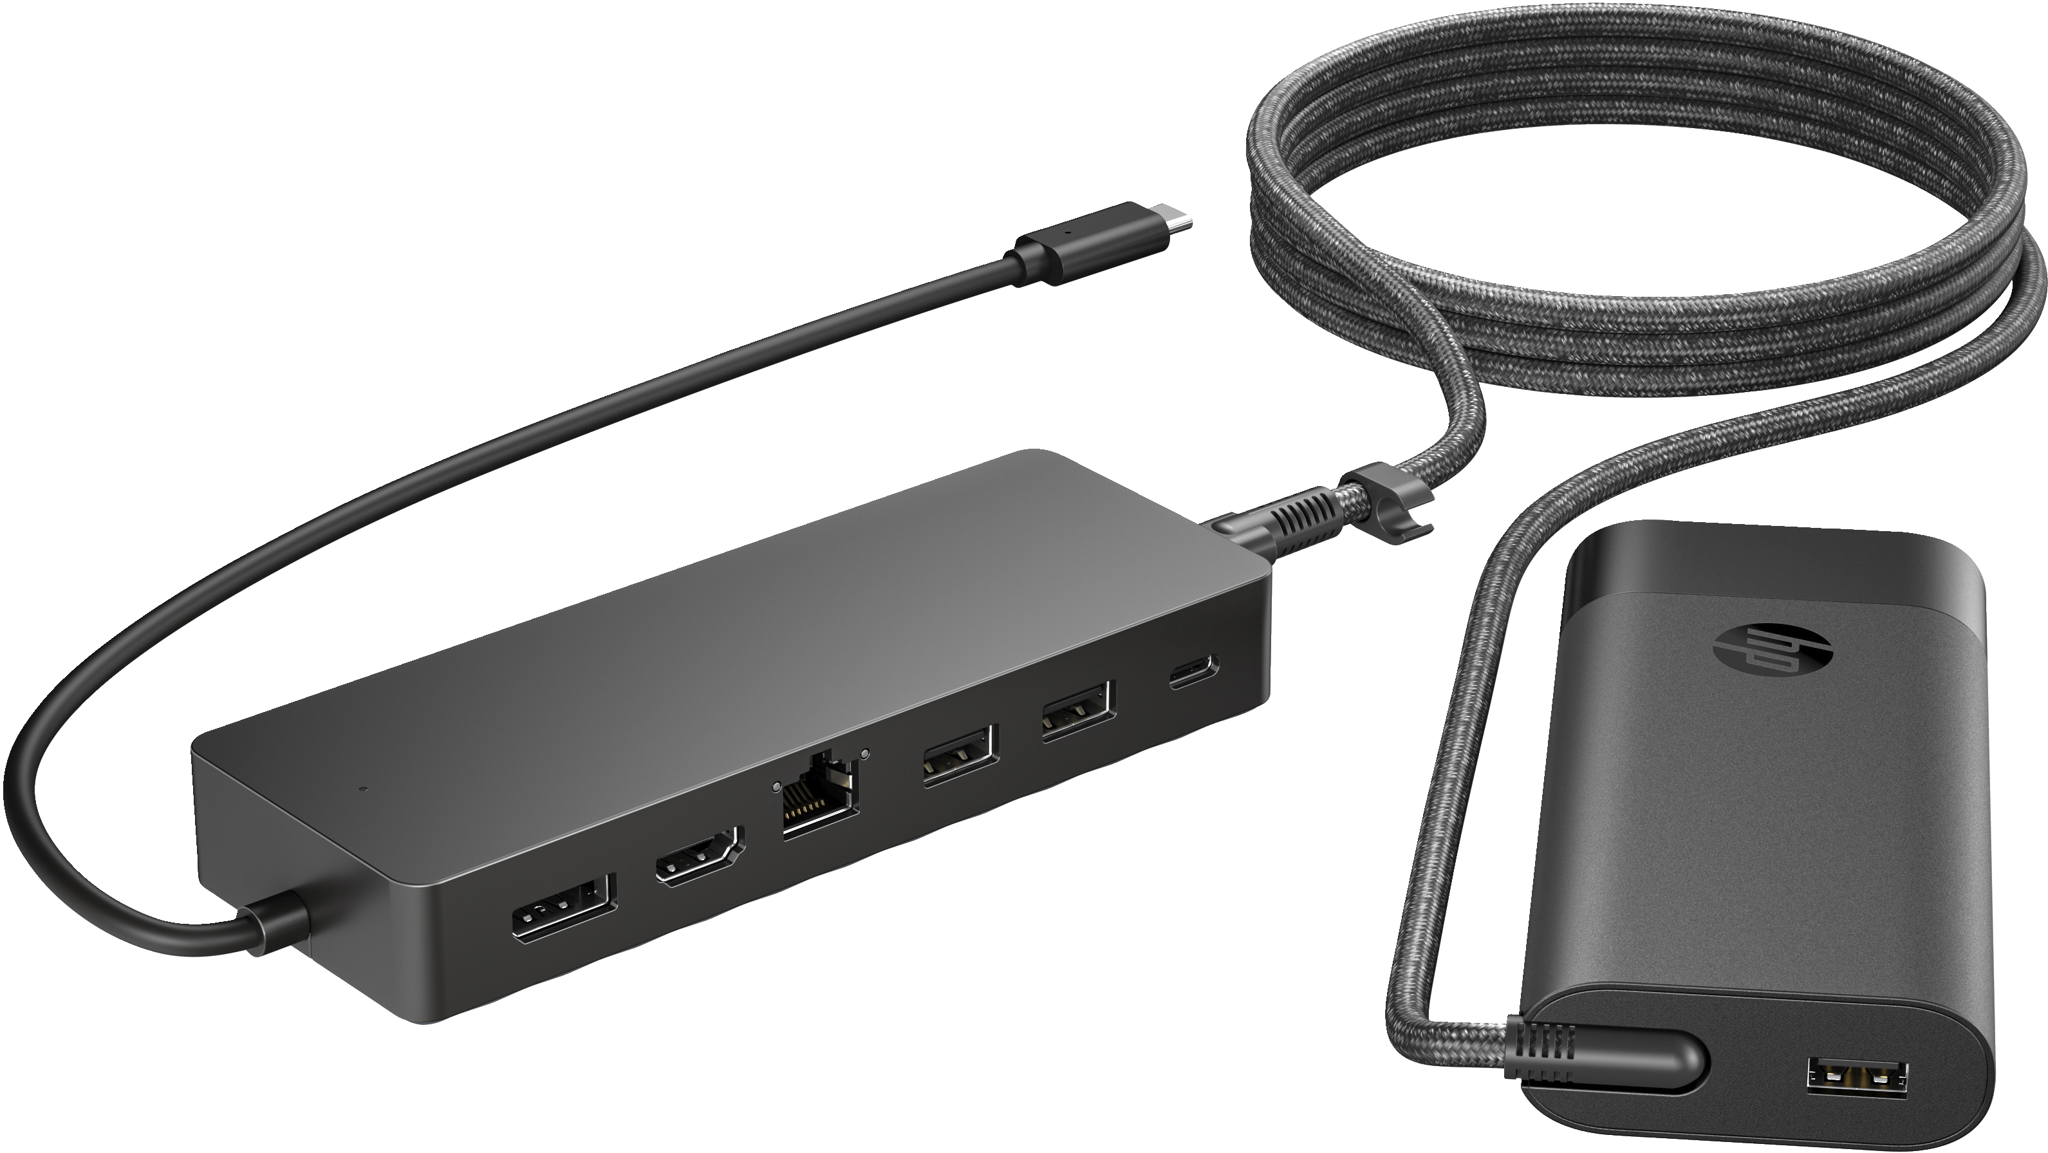 Bild von HP Universal USB-C Hub and Laptop Charger Combo, 150 mm, 55 mm, 21,5 mm, 115 g